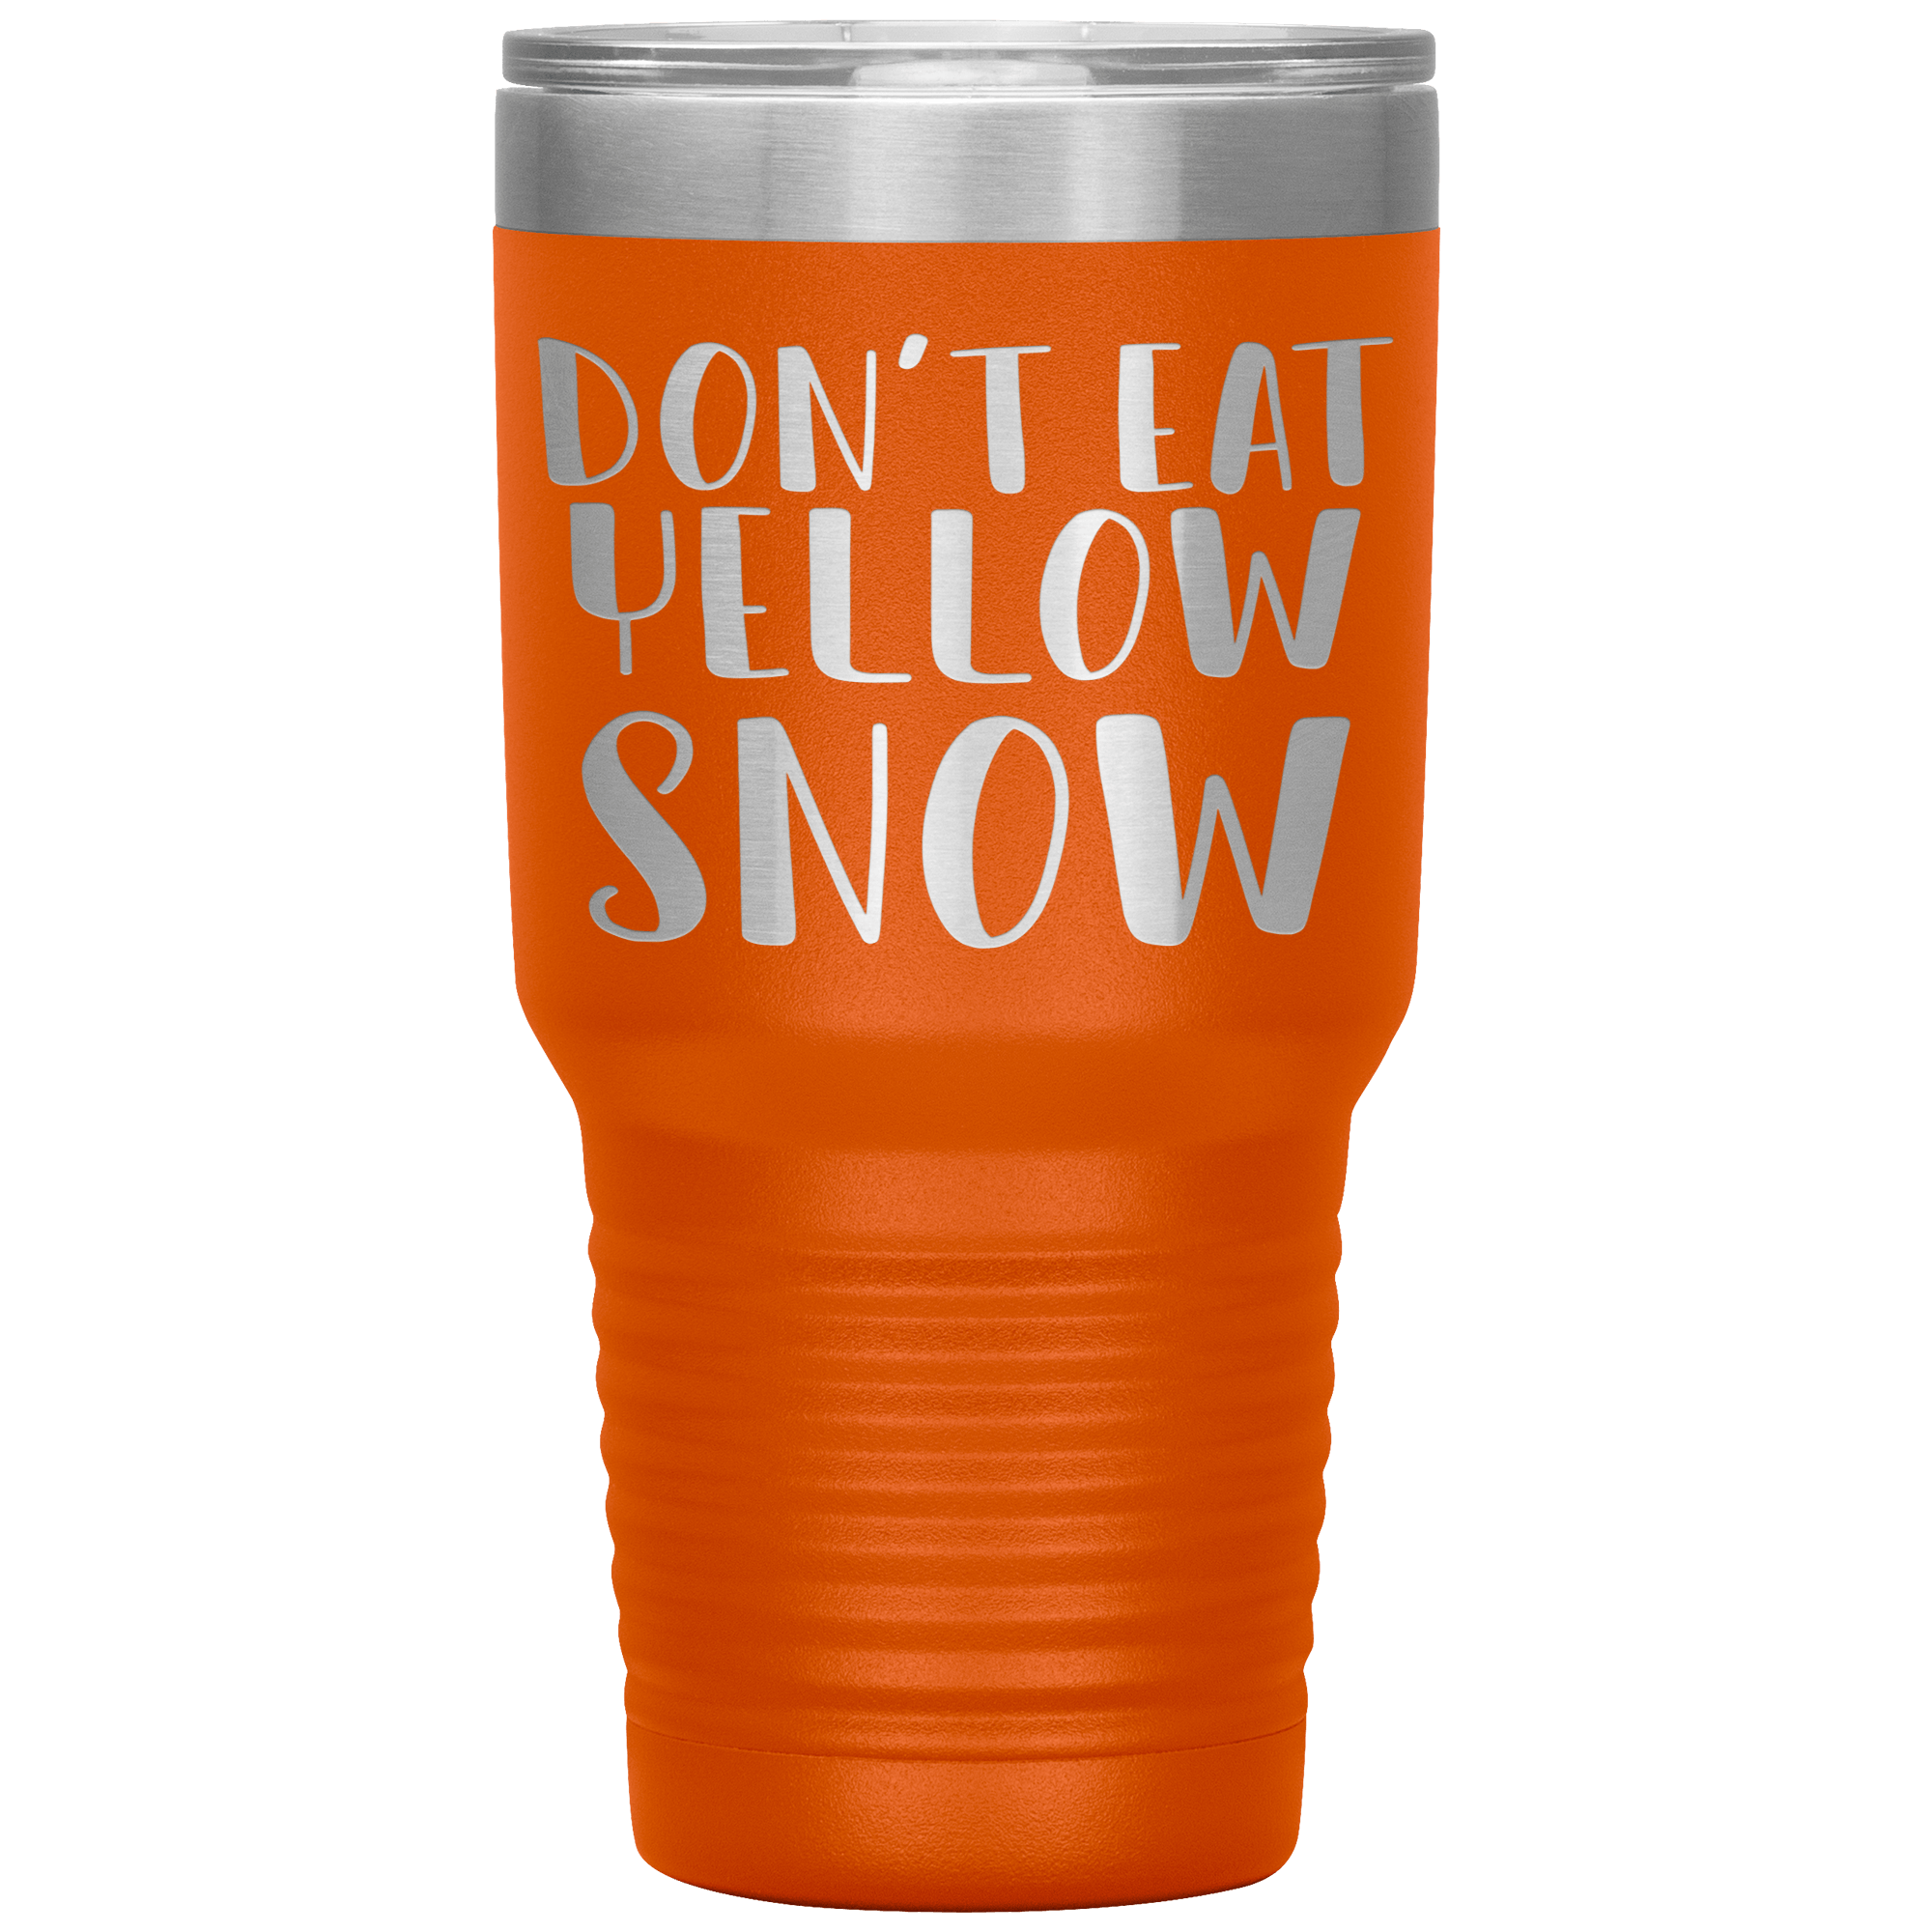 " DON'T EAT YELLOW SNOW " TUMBLER